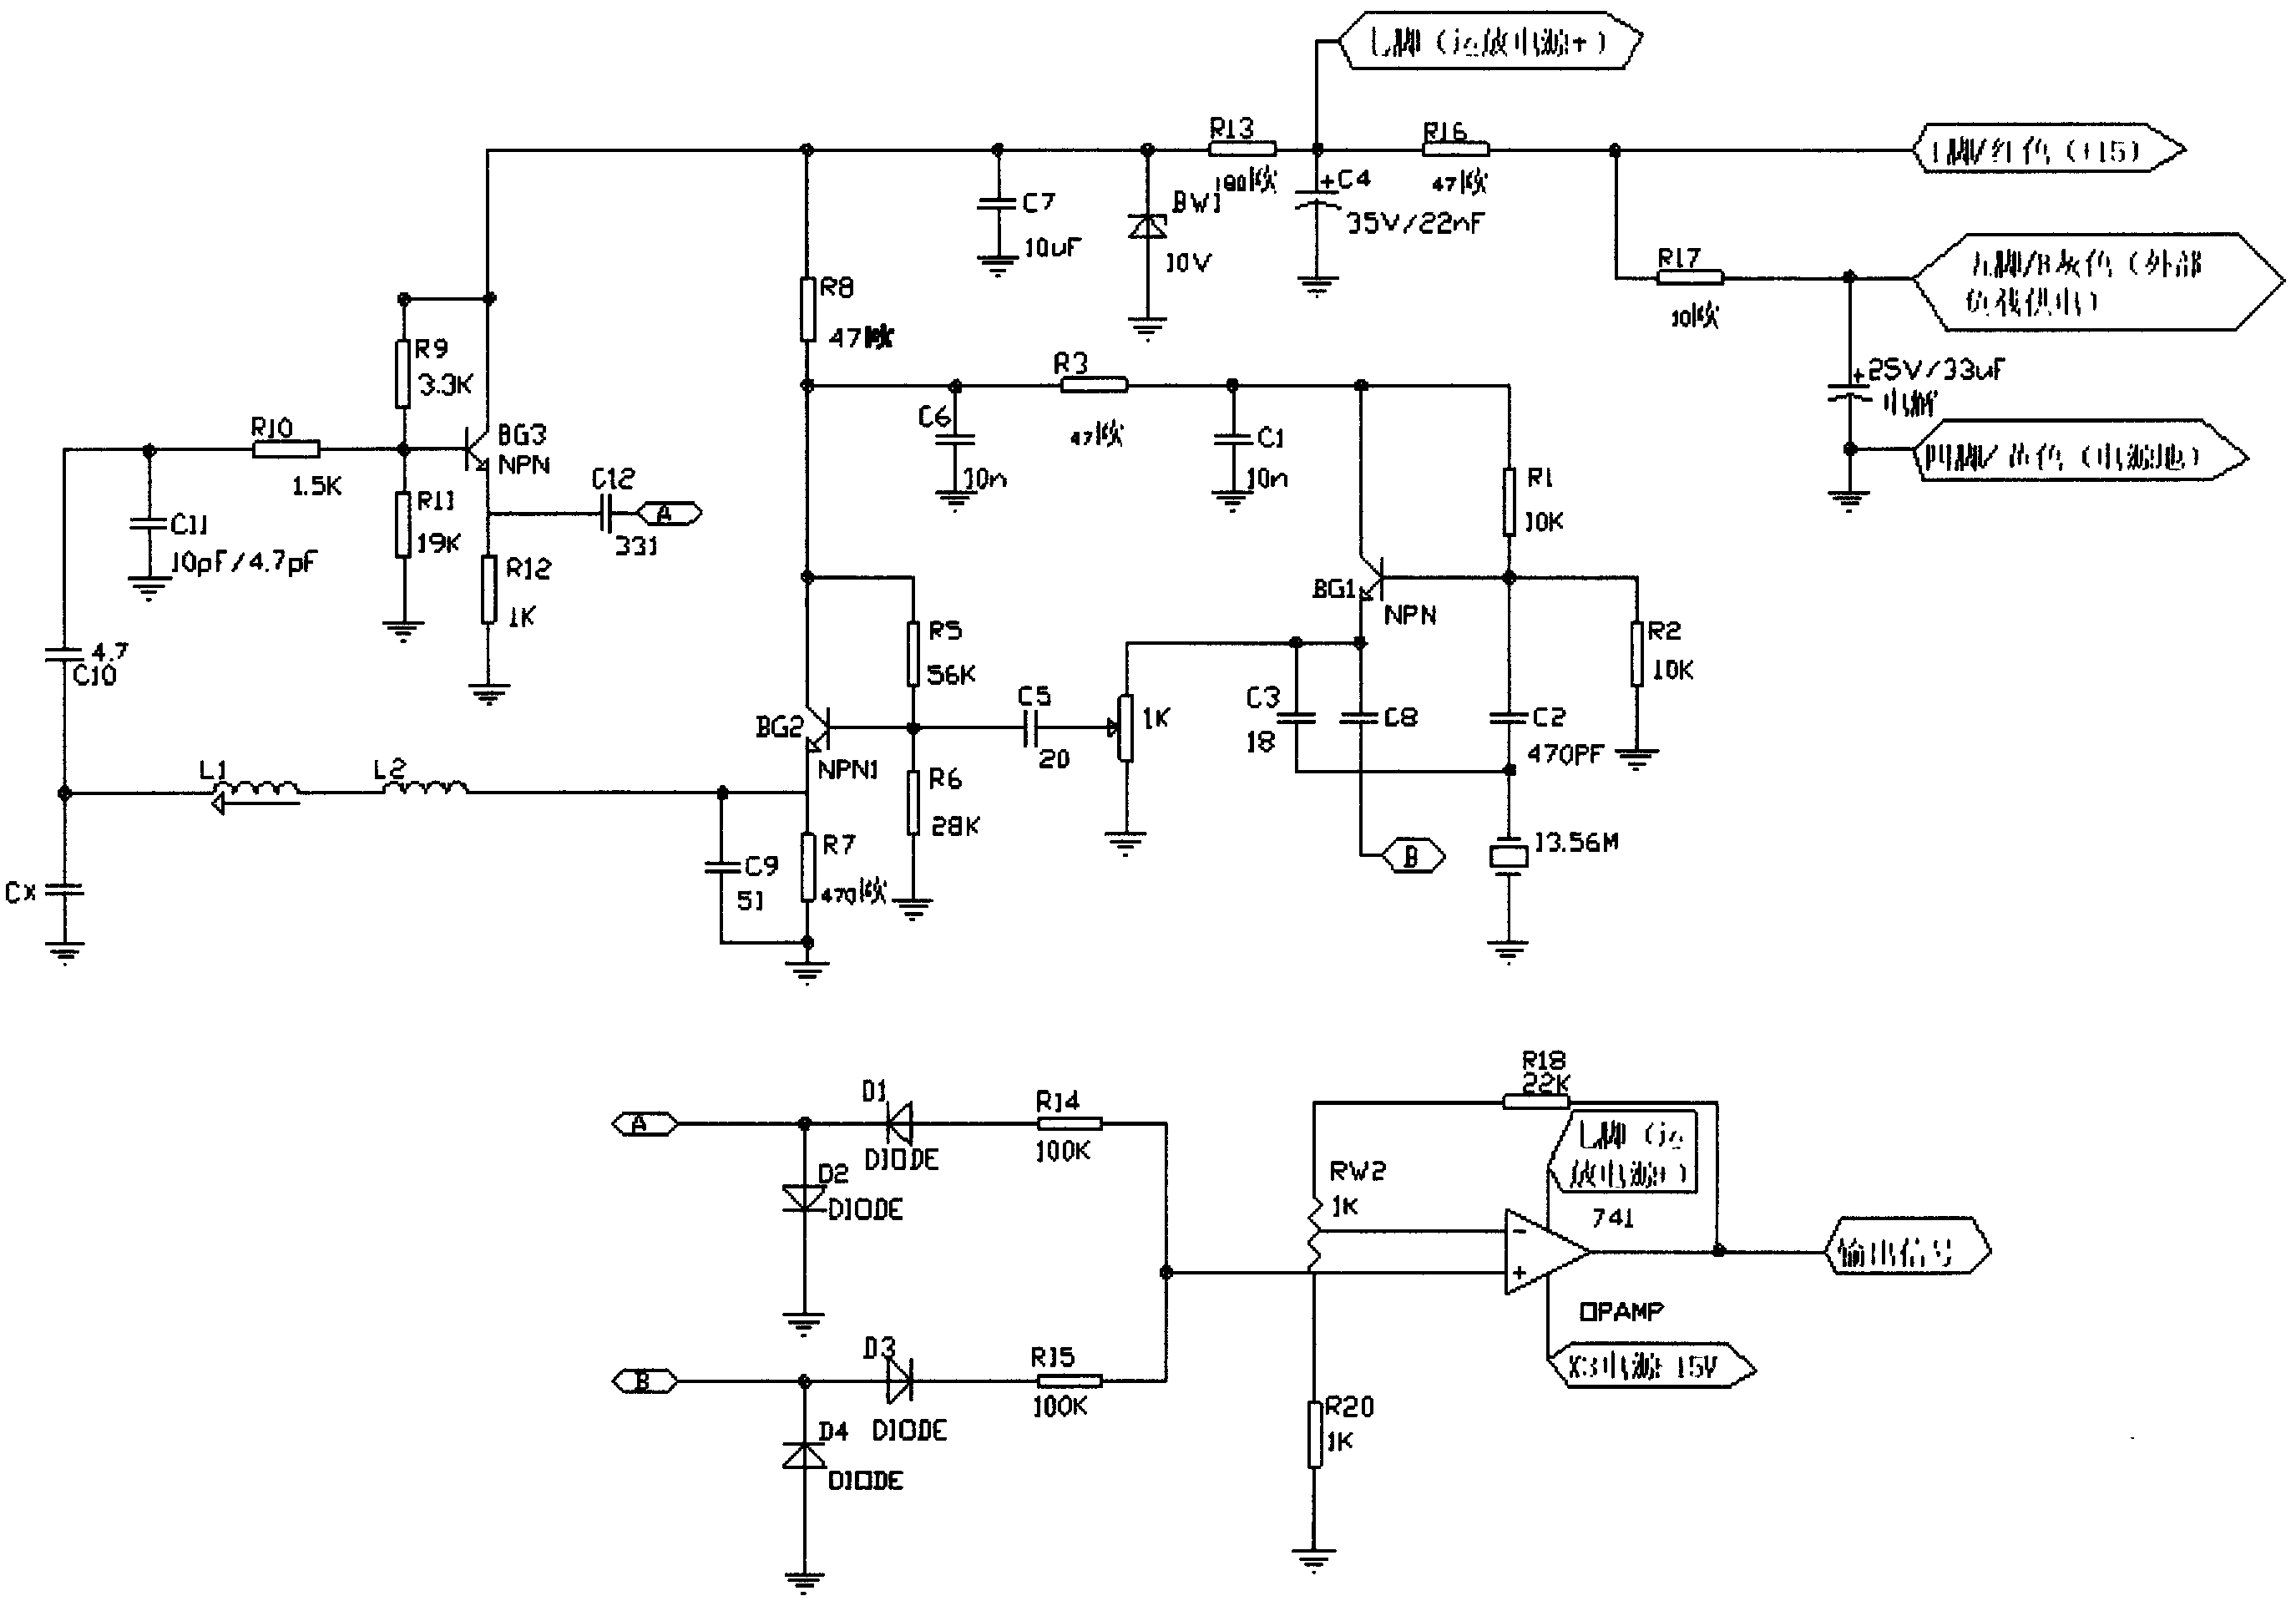 Empty-head notch detector circuit